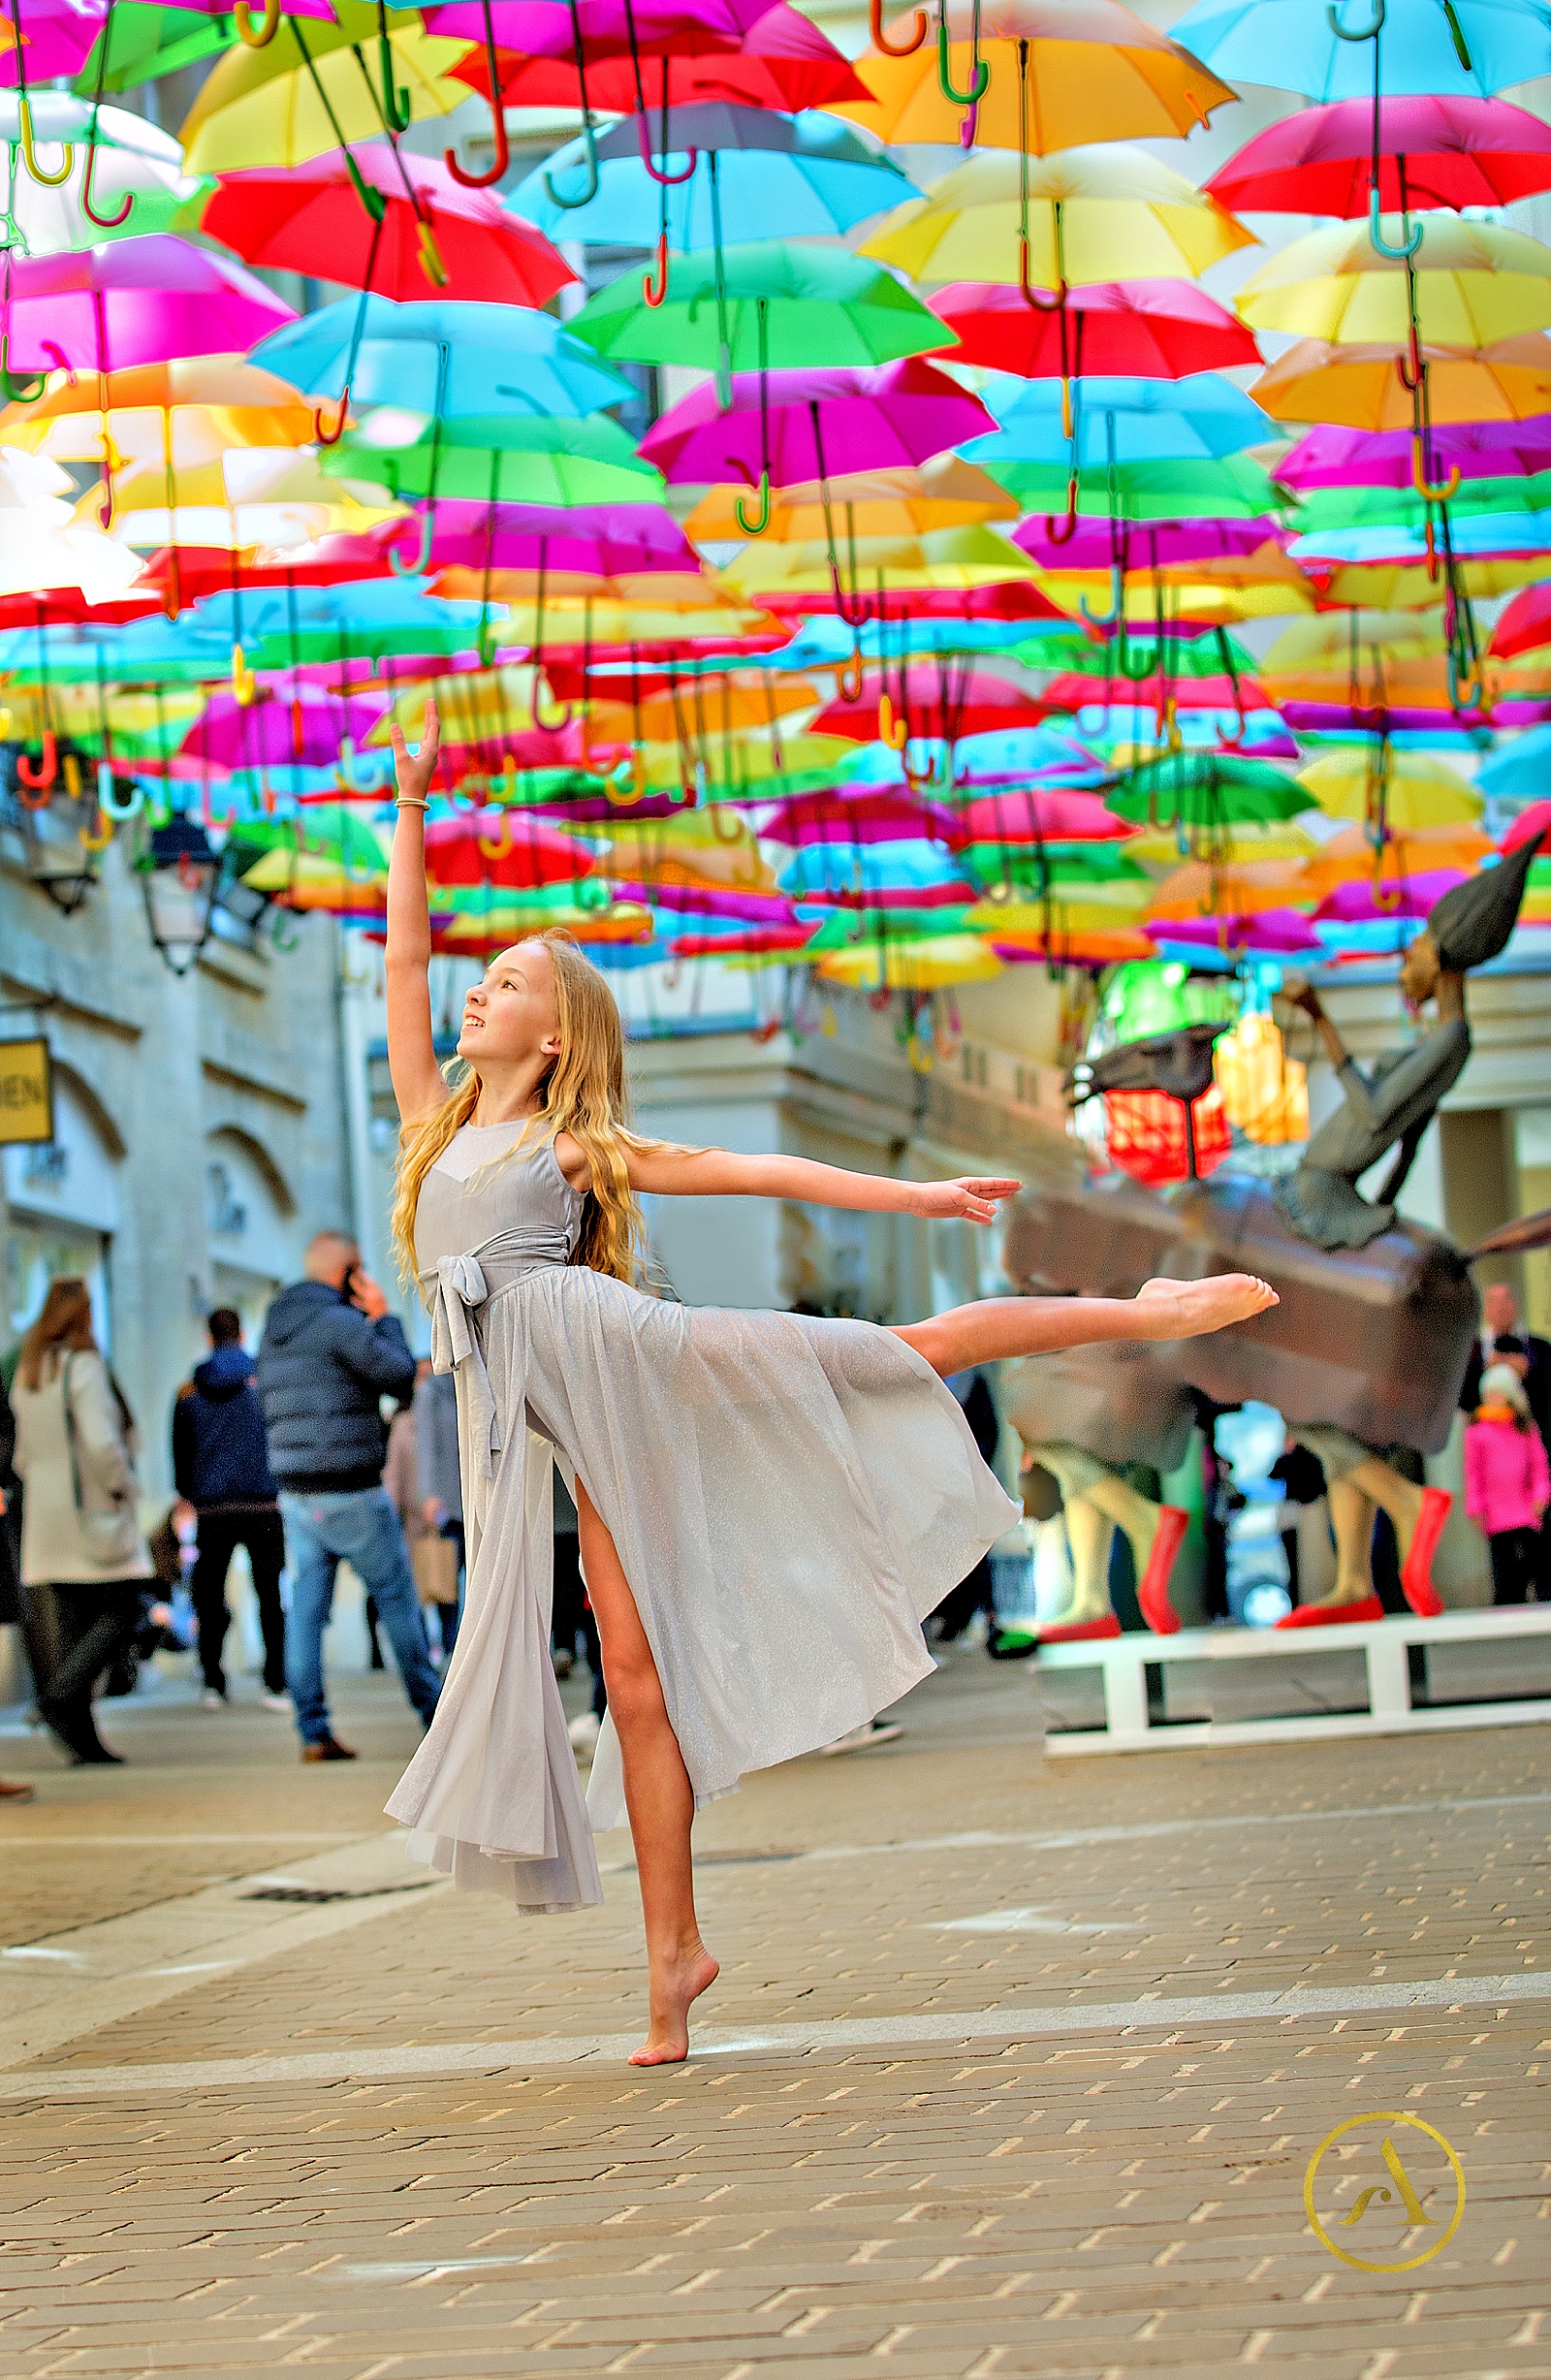 Dance Photography in Paris